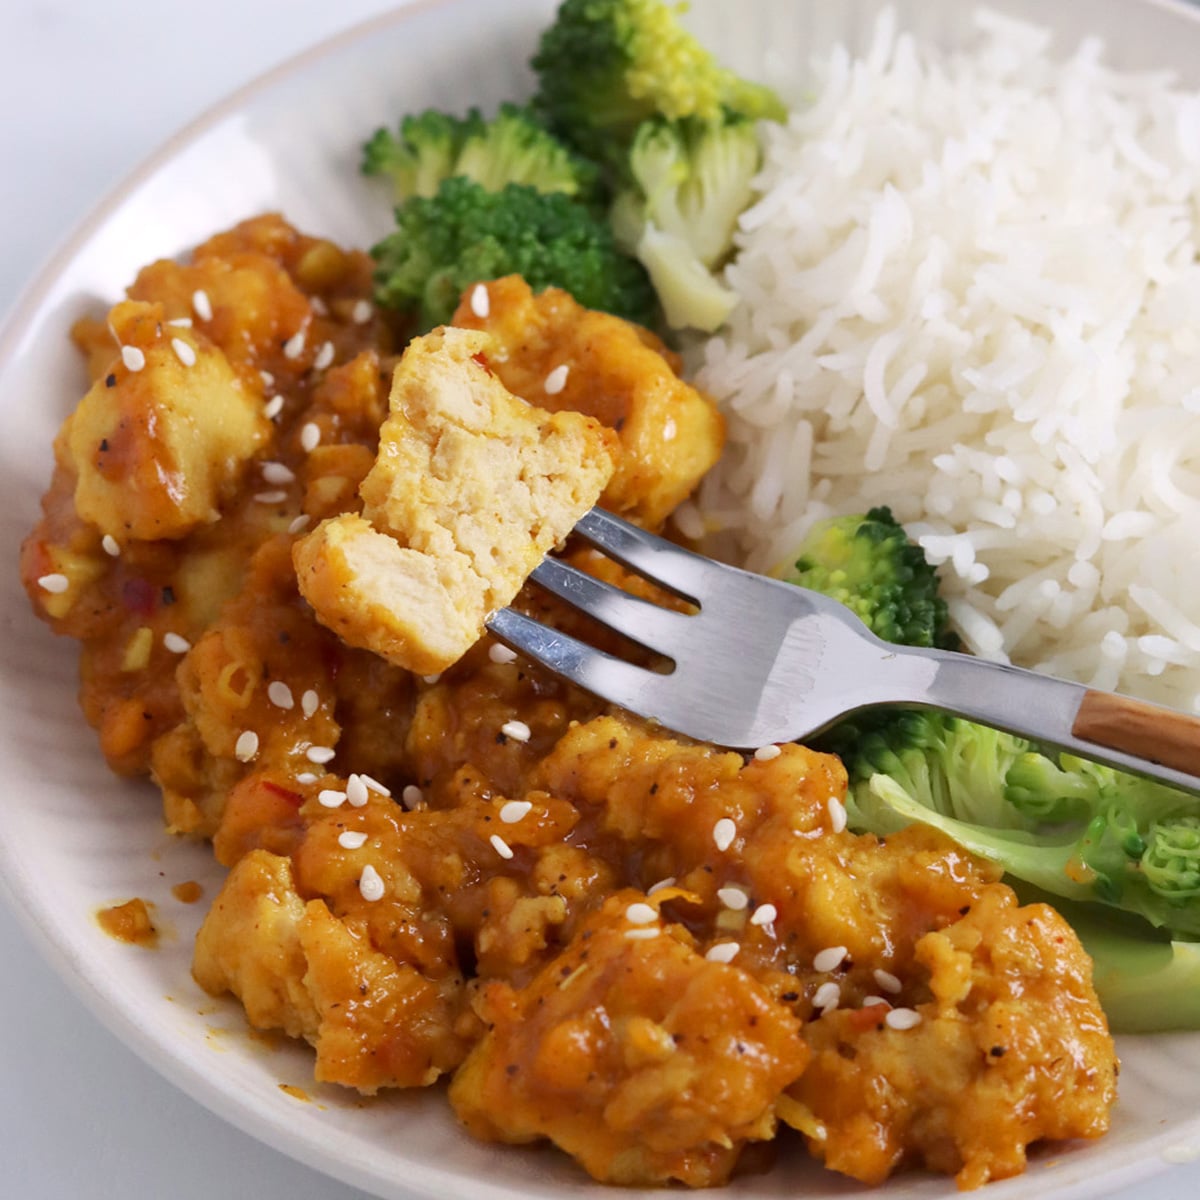 Close up of a bite of orange tofu on a fork over more orange tofu, broccoli and rice.